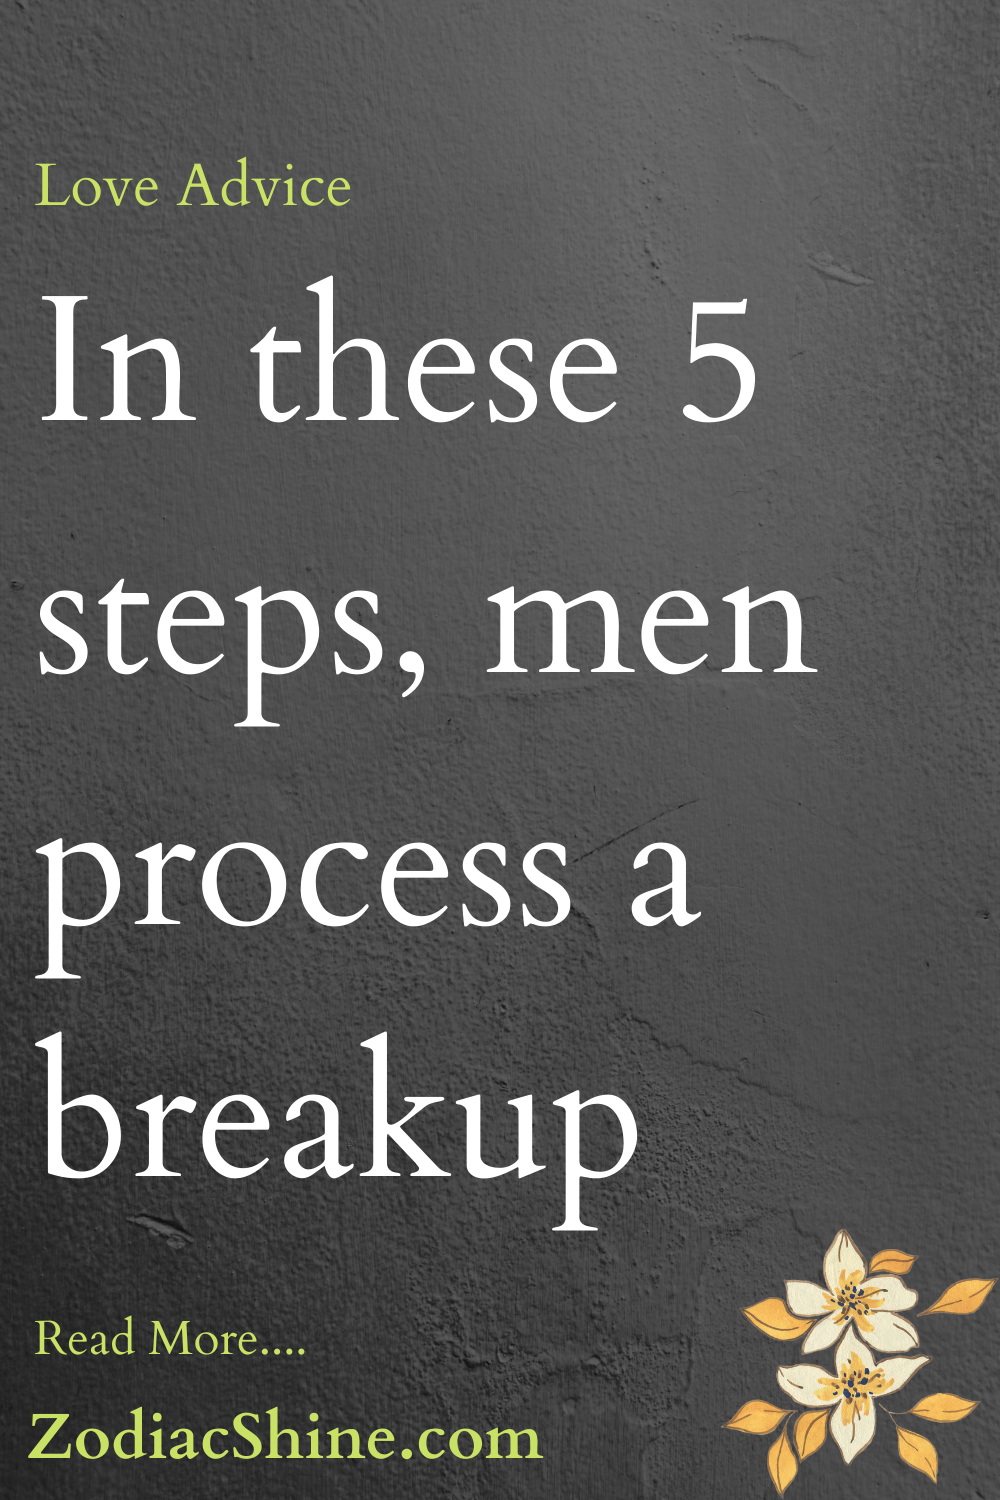 In these 5 steps, men process a breakup